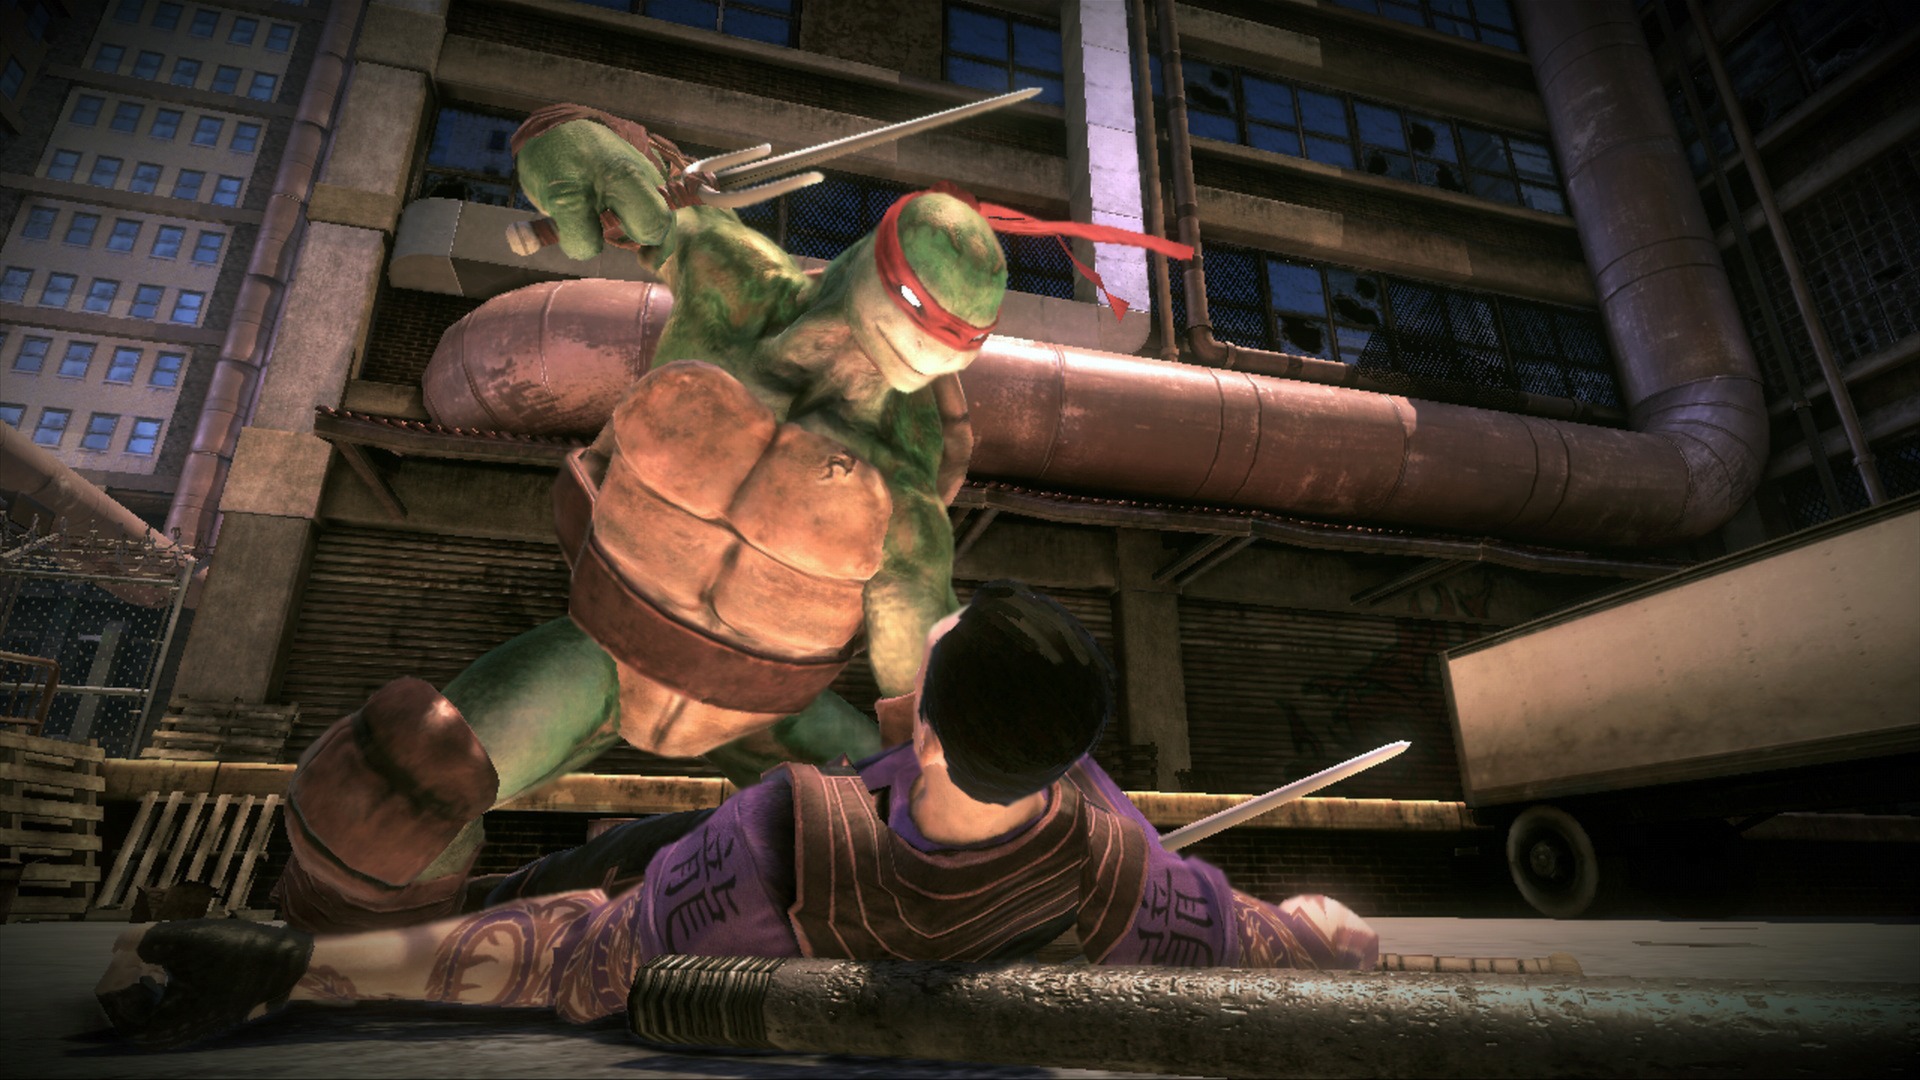 Teenage Mutant Ninja Turtles™: Out of the Shadows